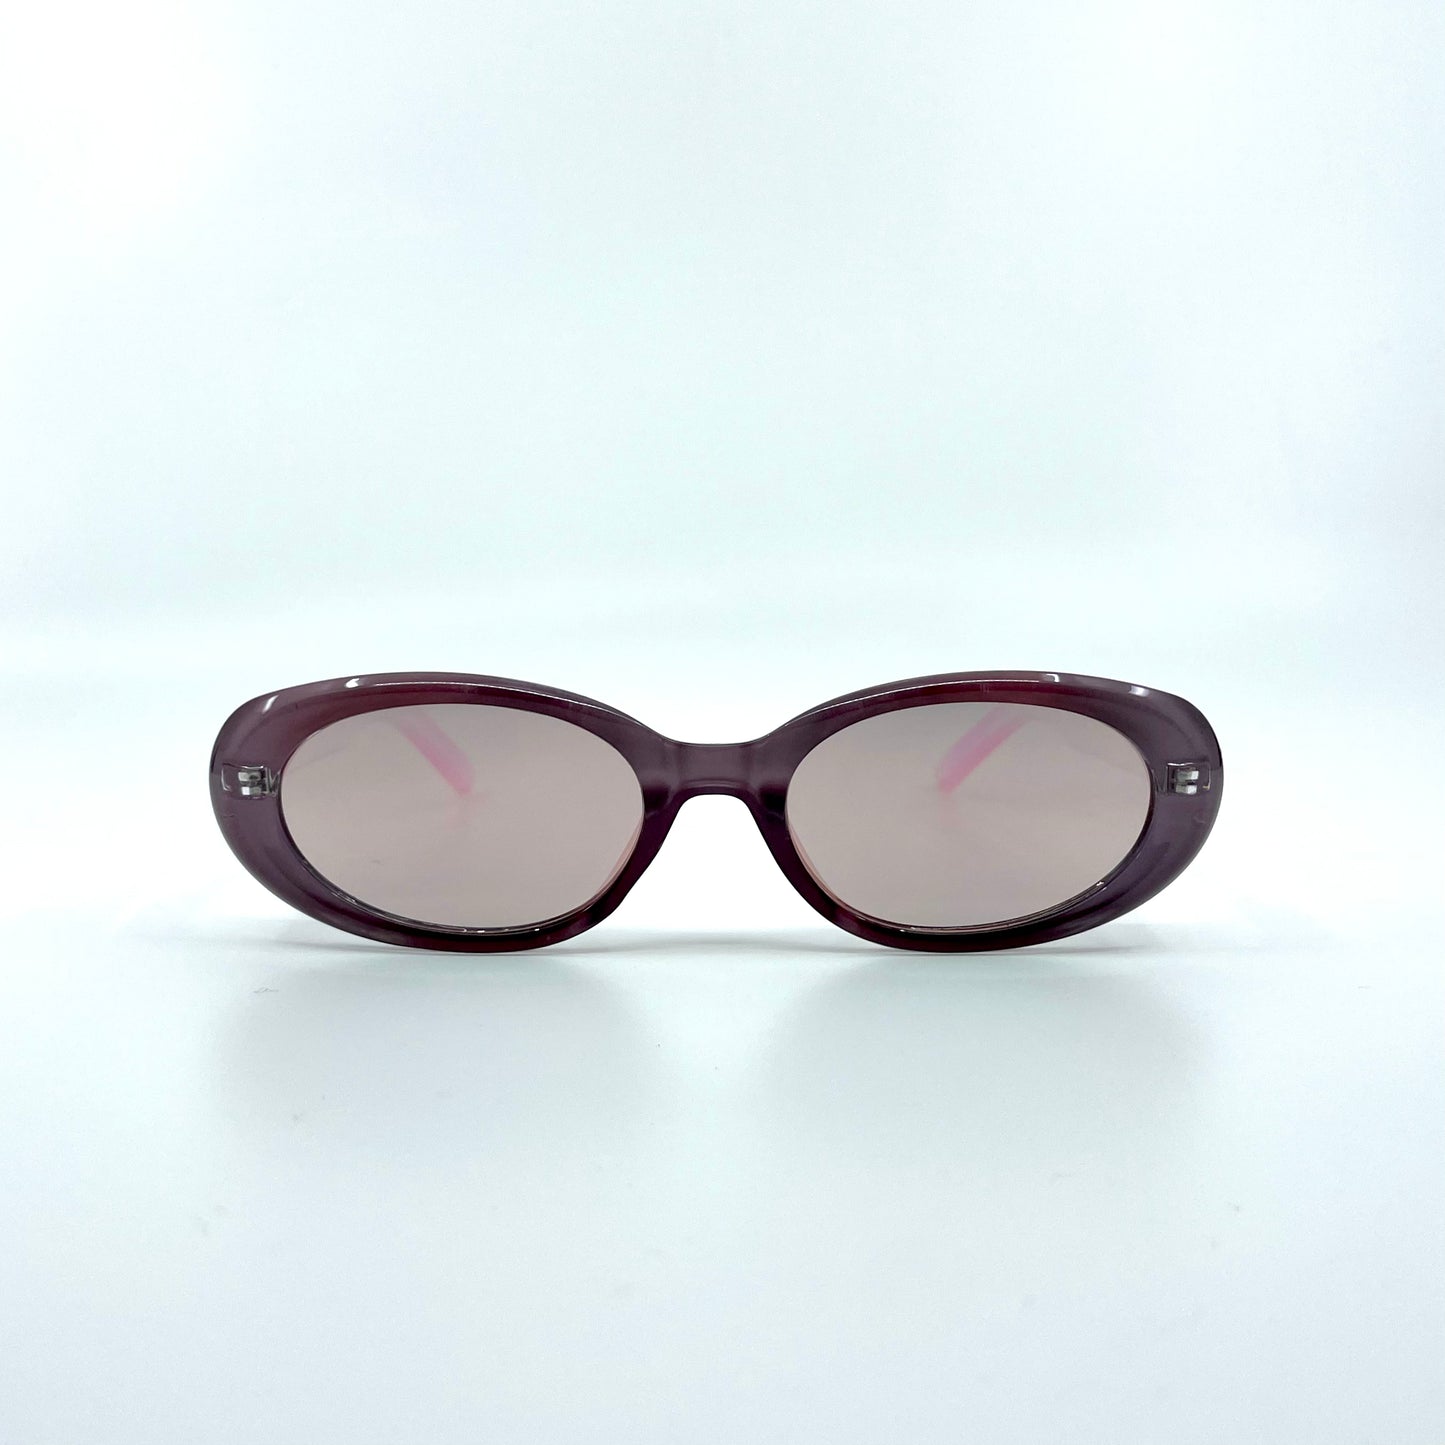 “Uptown” Oval Sunglasses